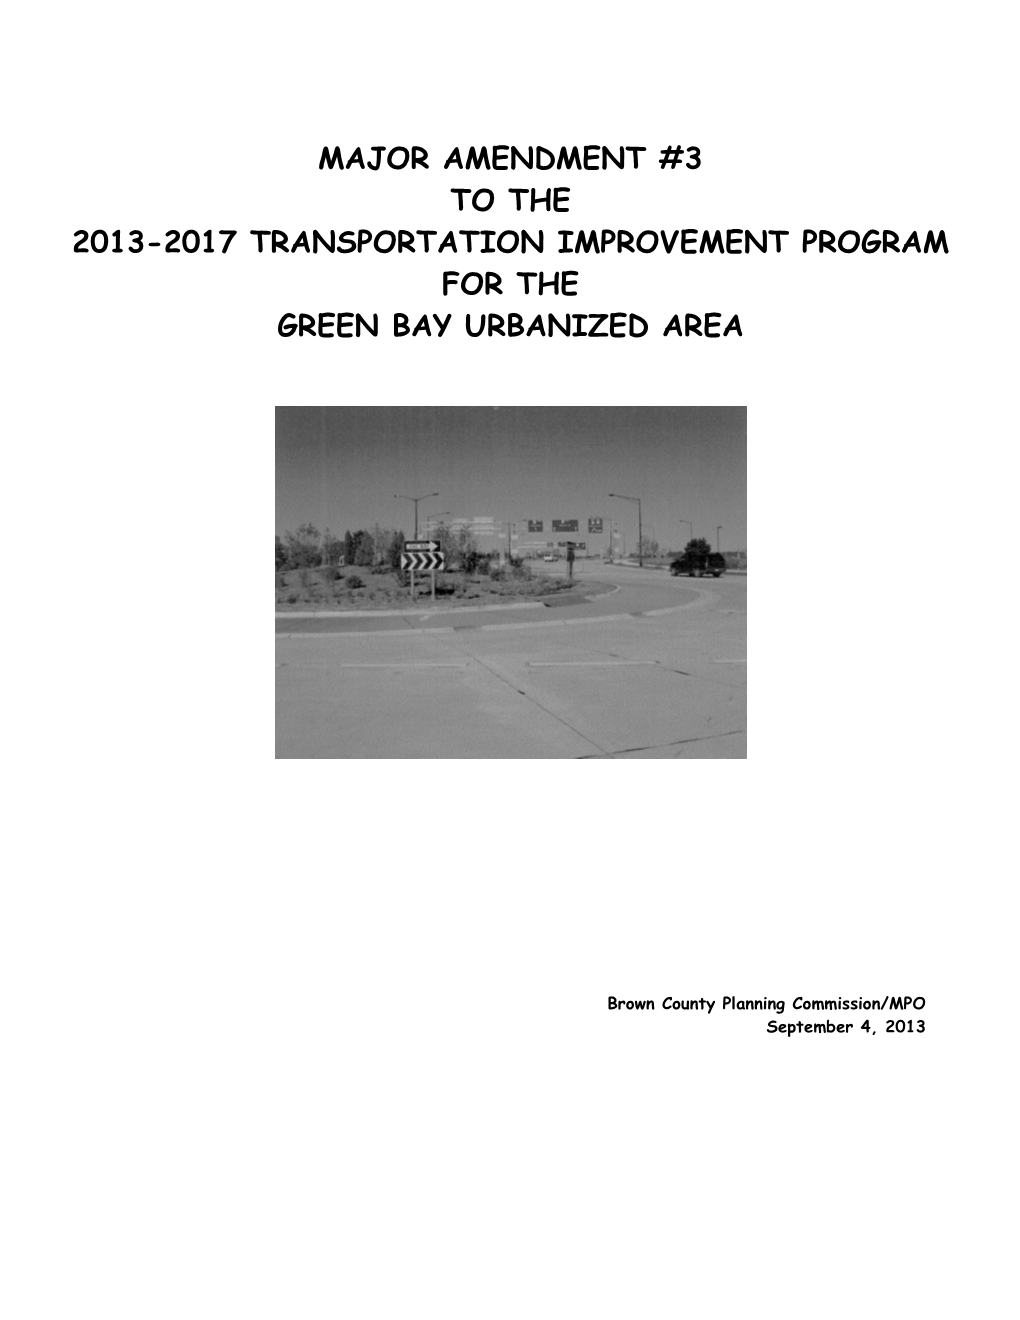 2007-2011 Transportation Improvement Program